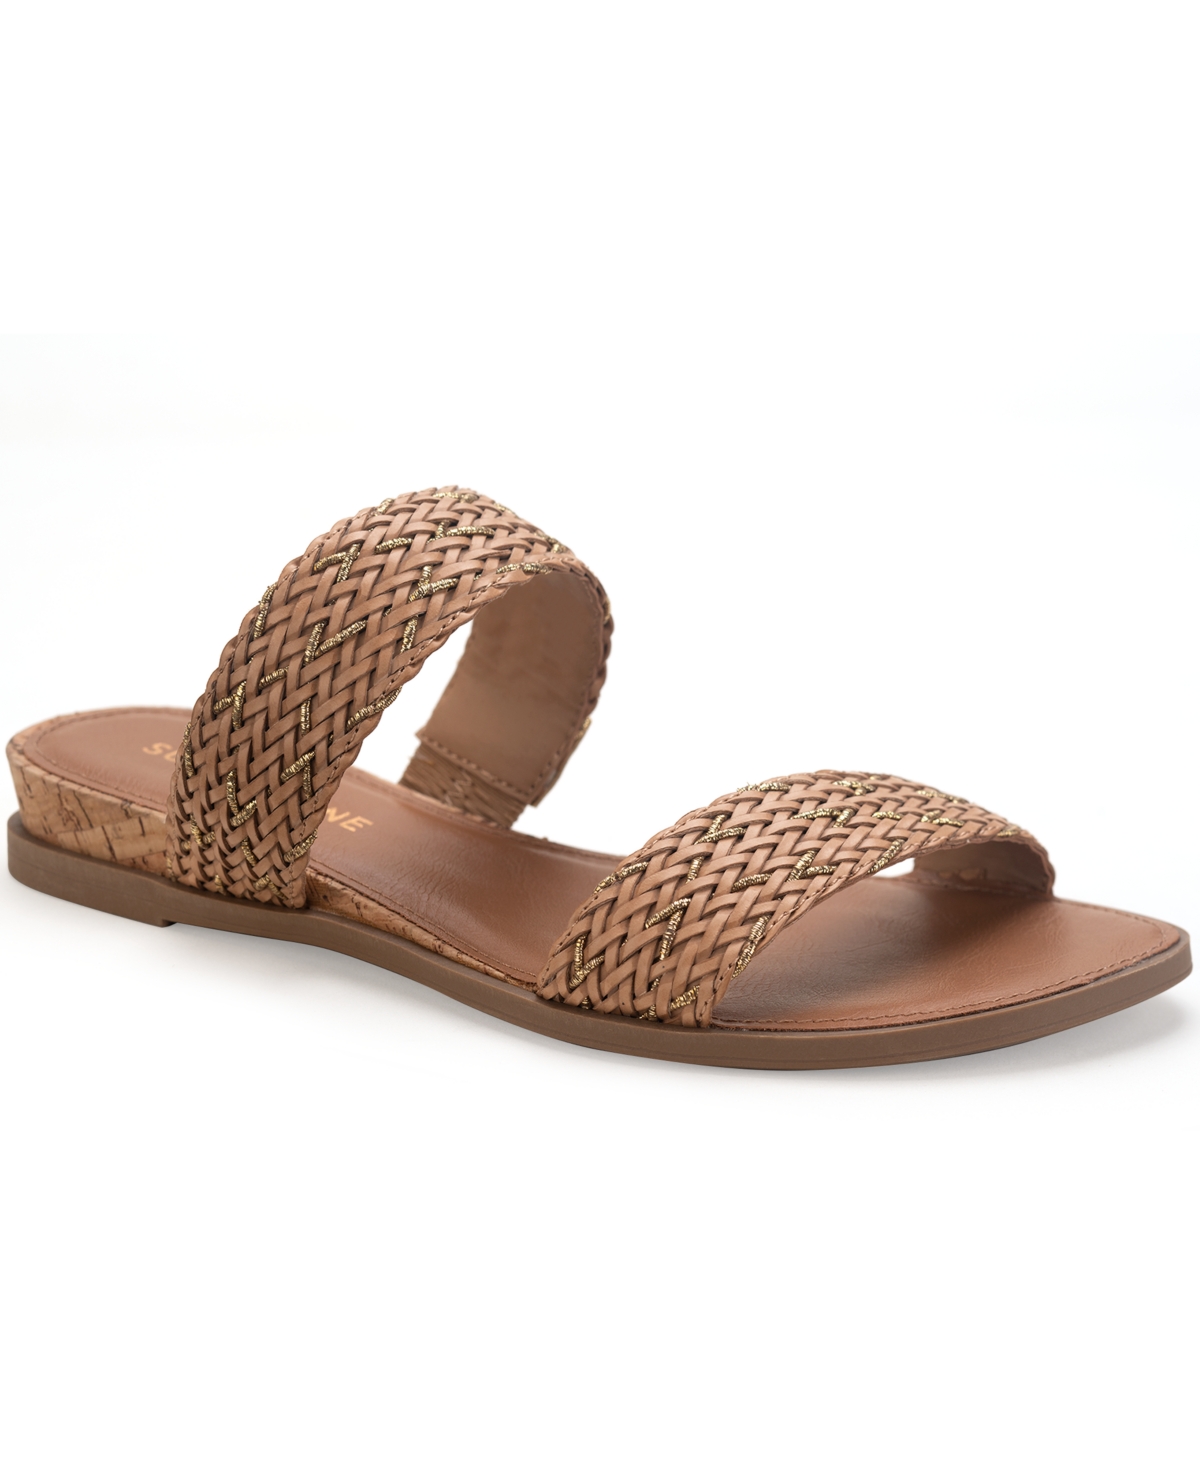 Sun + Stone Easten Slide Sandals, Created For Macy's In Tan Woven